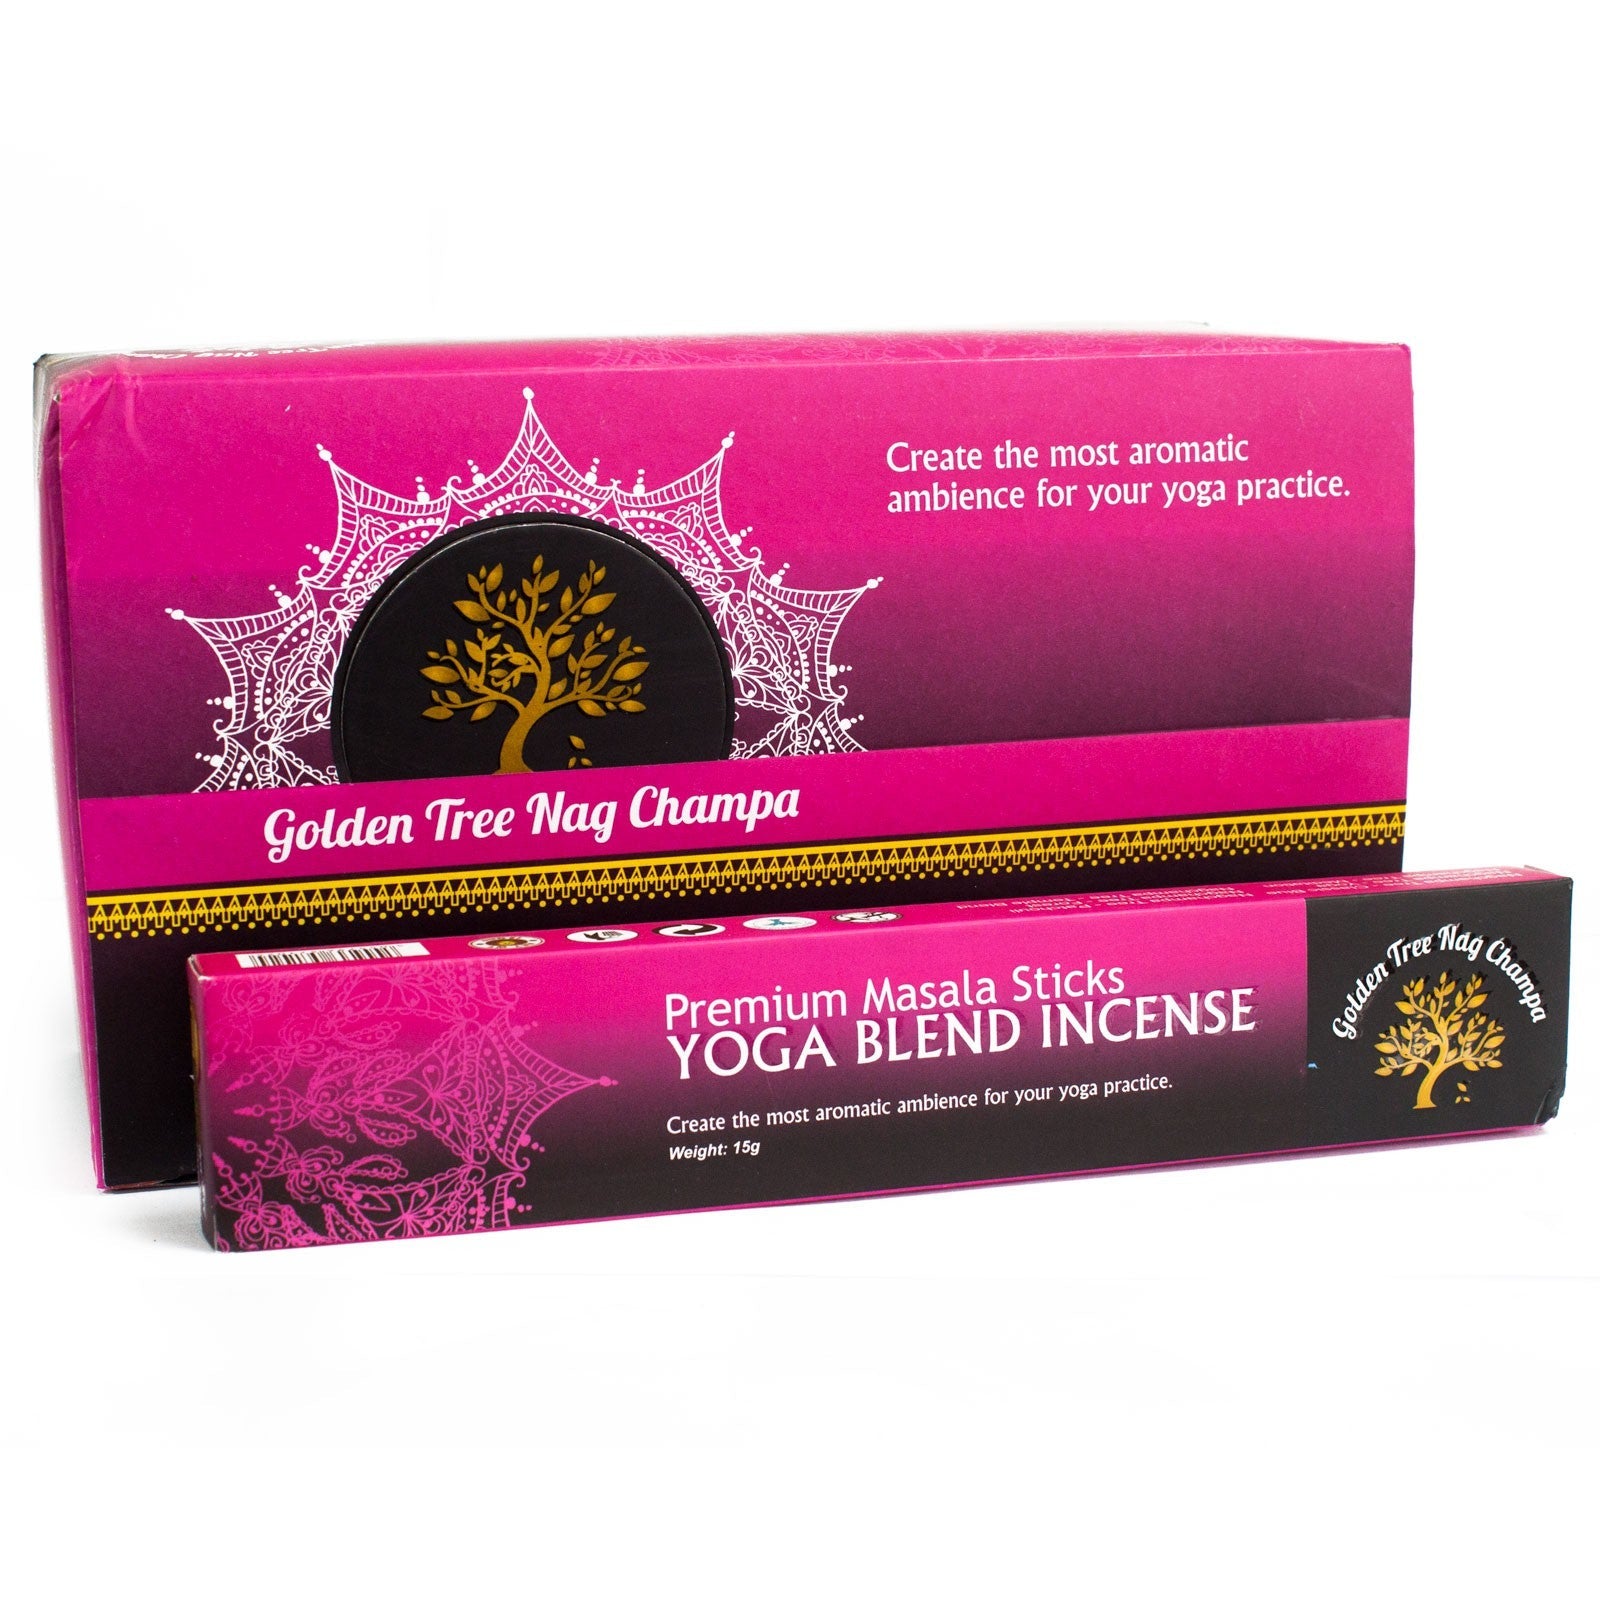 Premium Golden Tree Nag Champa Incense Sticks incense sticks Soul Inspired Yoga Blend 